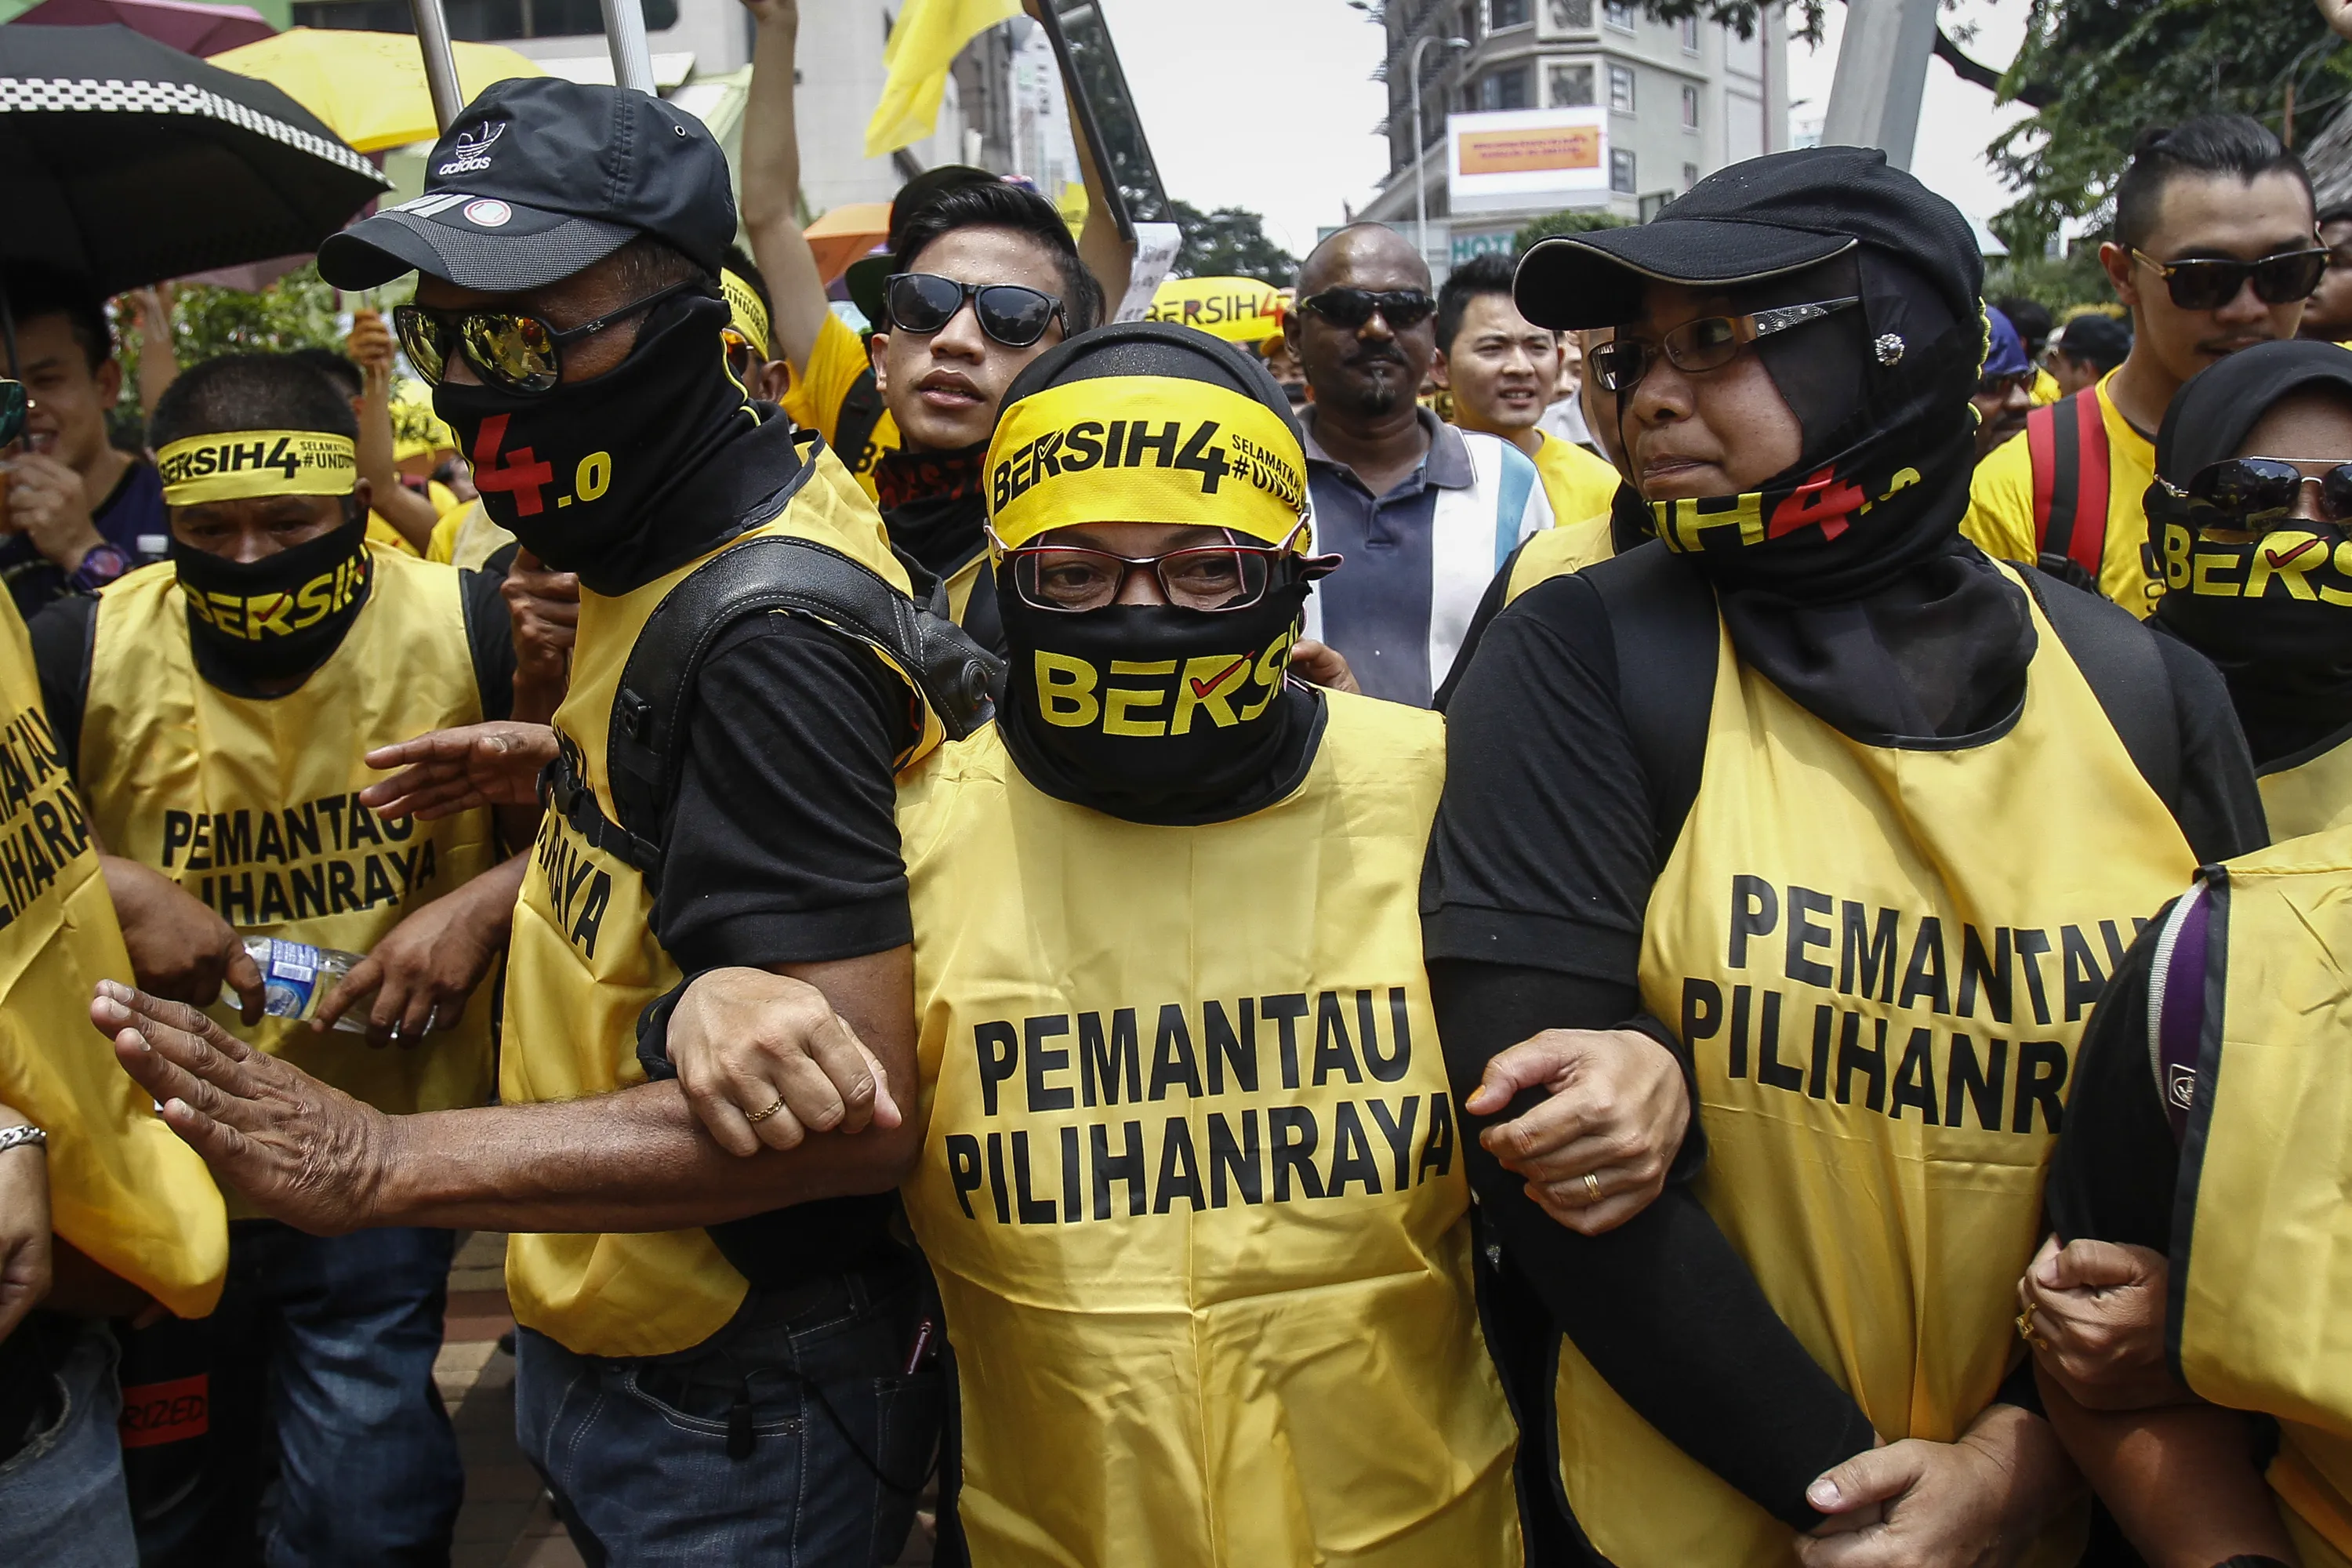 Малайзия новости. Malaysian protesters March against Prime Minister Najib. Малайзия запретила желтый цвет. Tawarruq demands in Malaysia. GSIH.